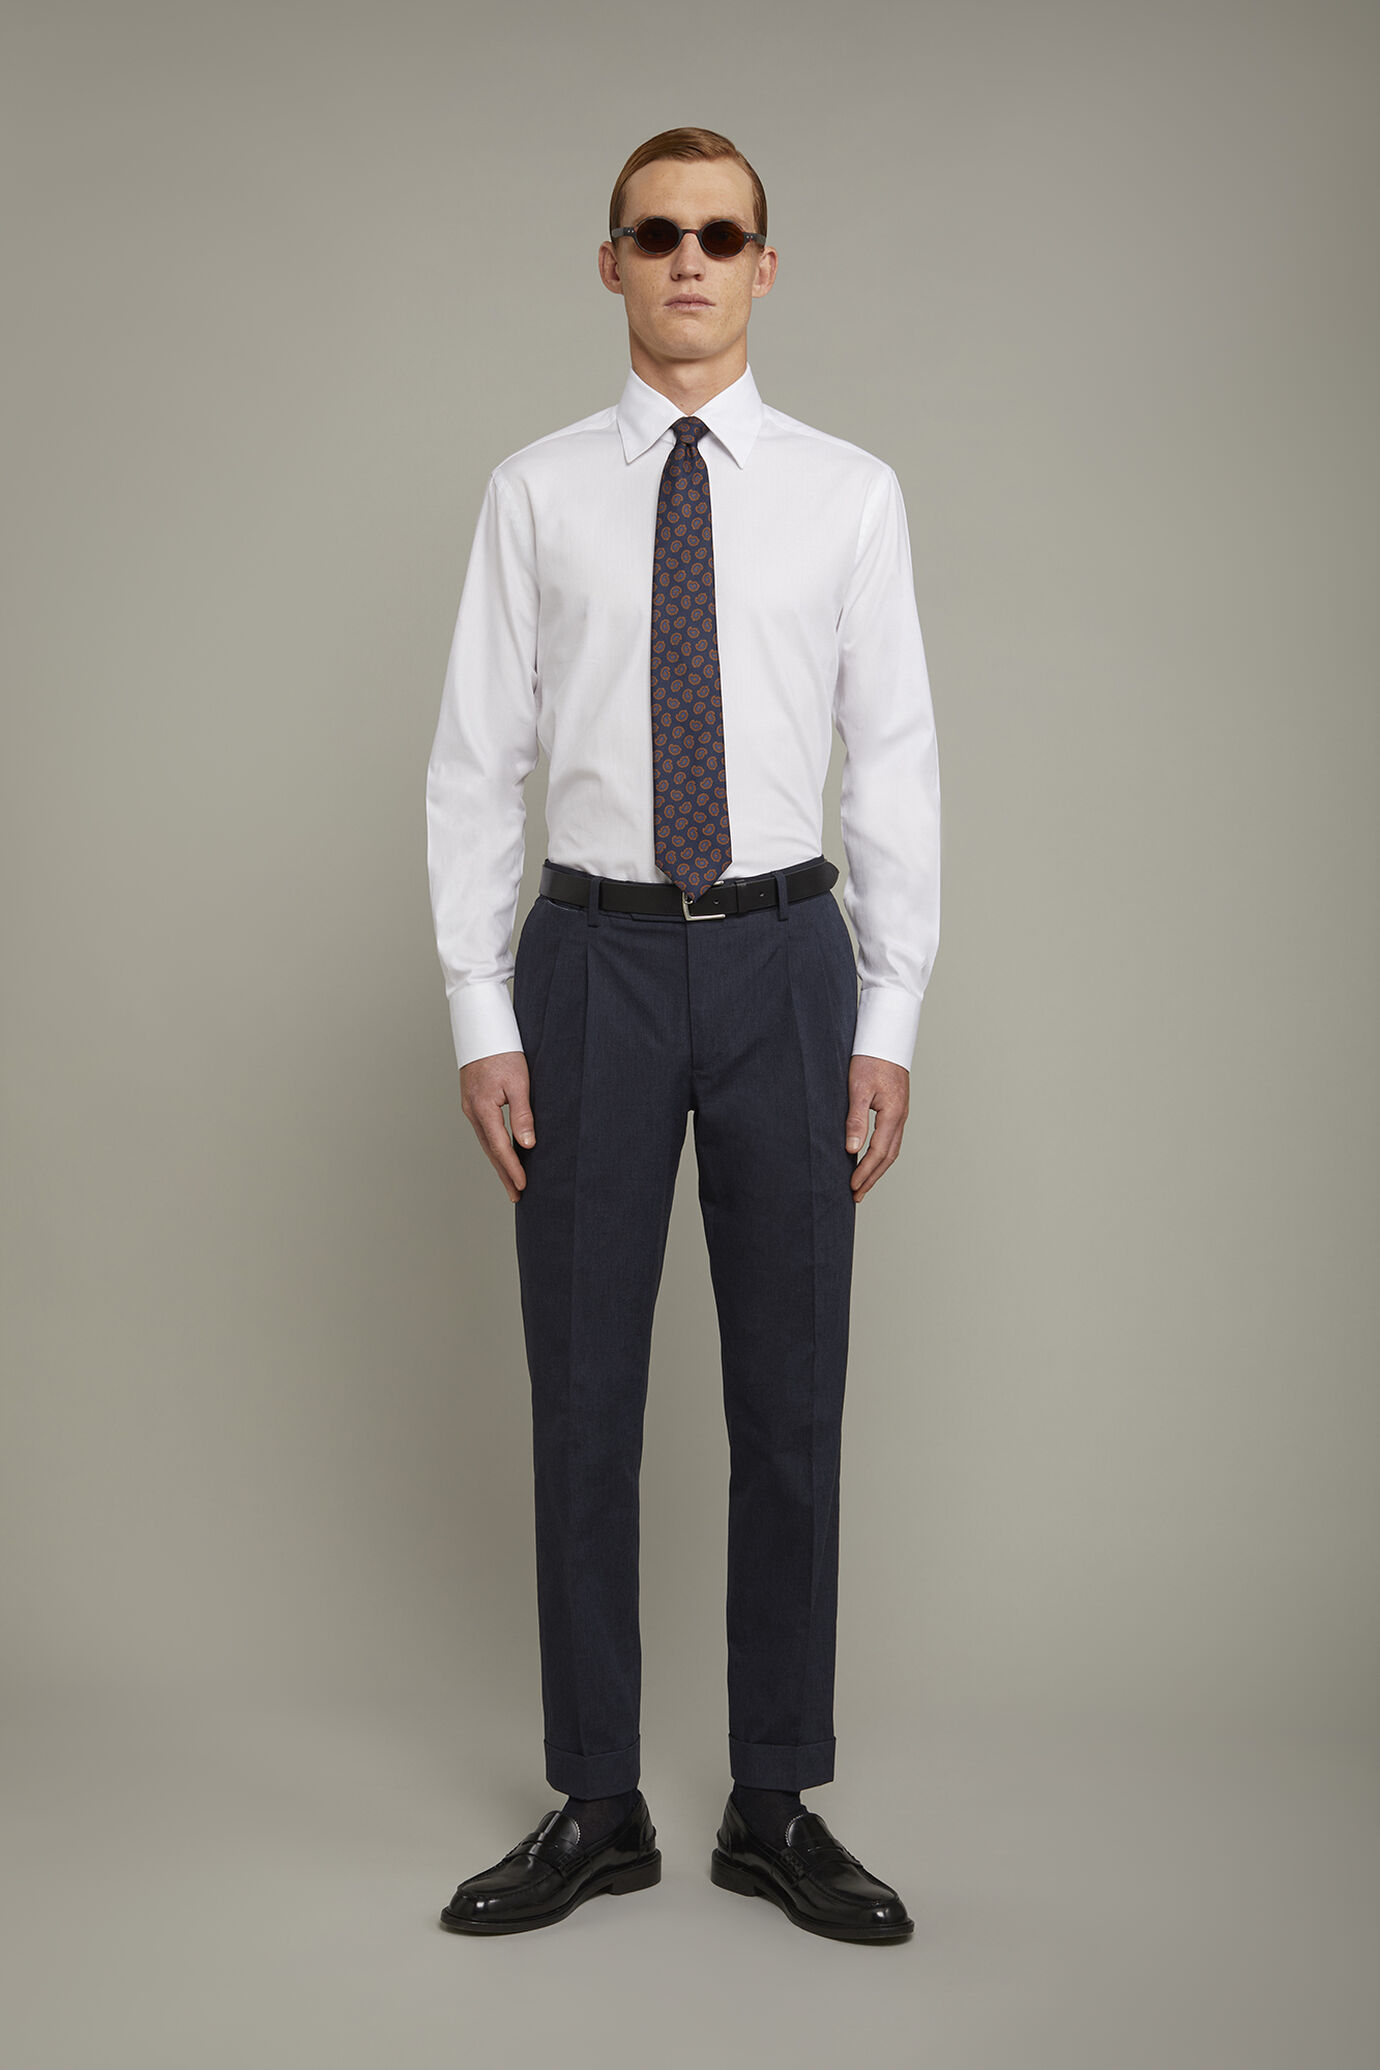 Men's shirt classic collar 100% cotton herringbone fabric plain regular fit